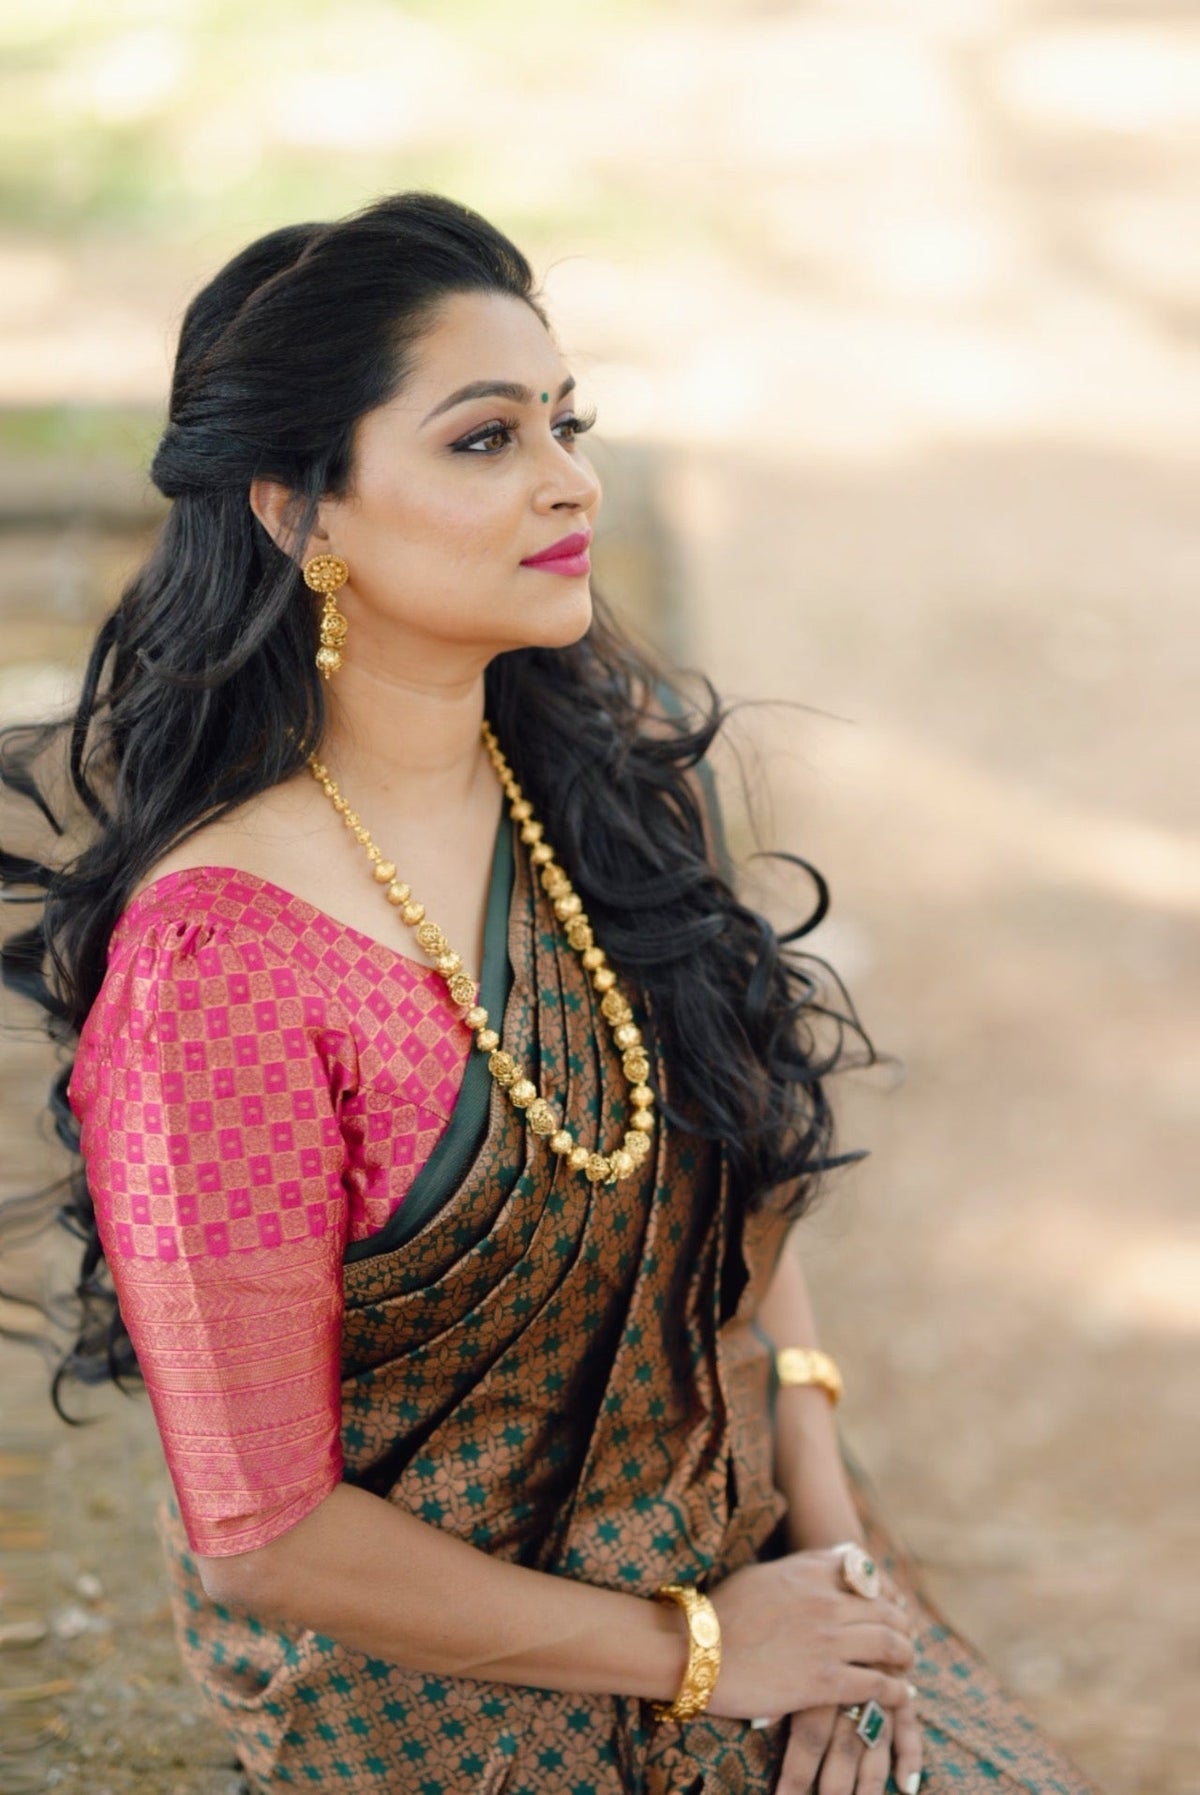 Handloom Weave Silk Saree with Bold Colors